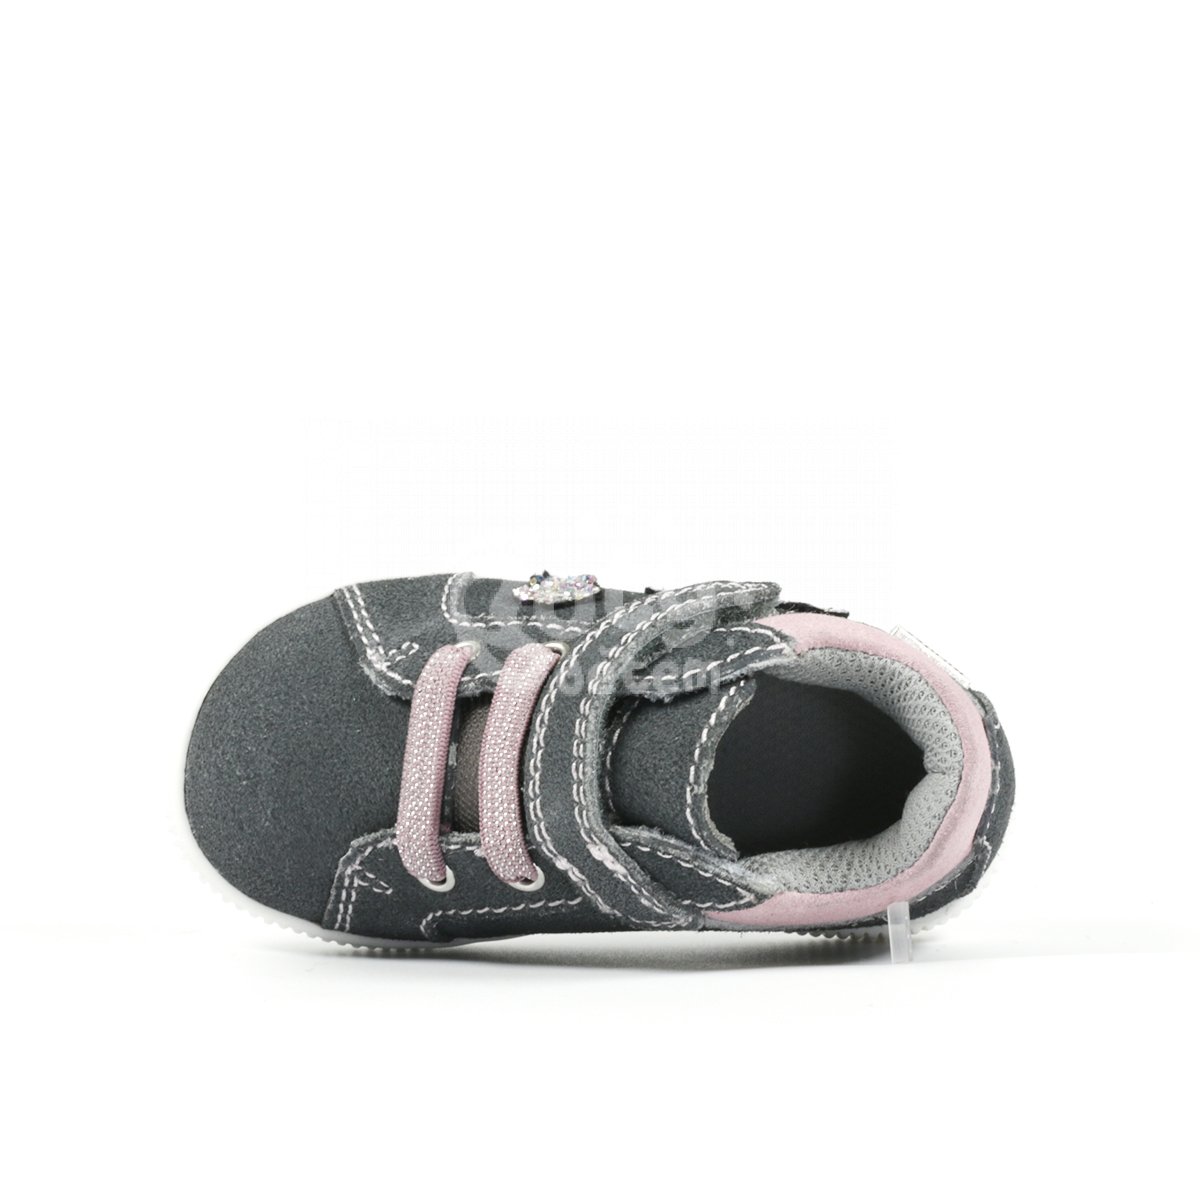 Kožená obuv s membránou Vali Ricther 2503-4111-6301 šedá